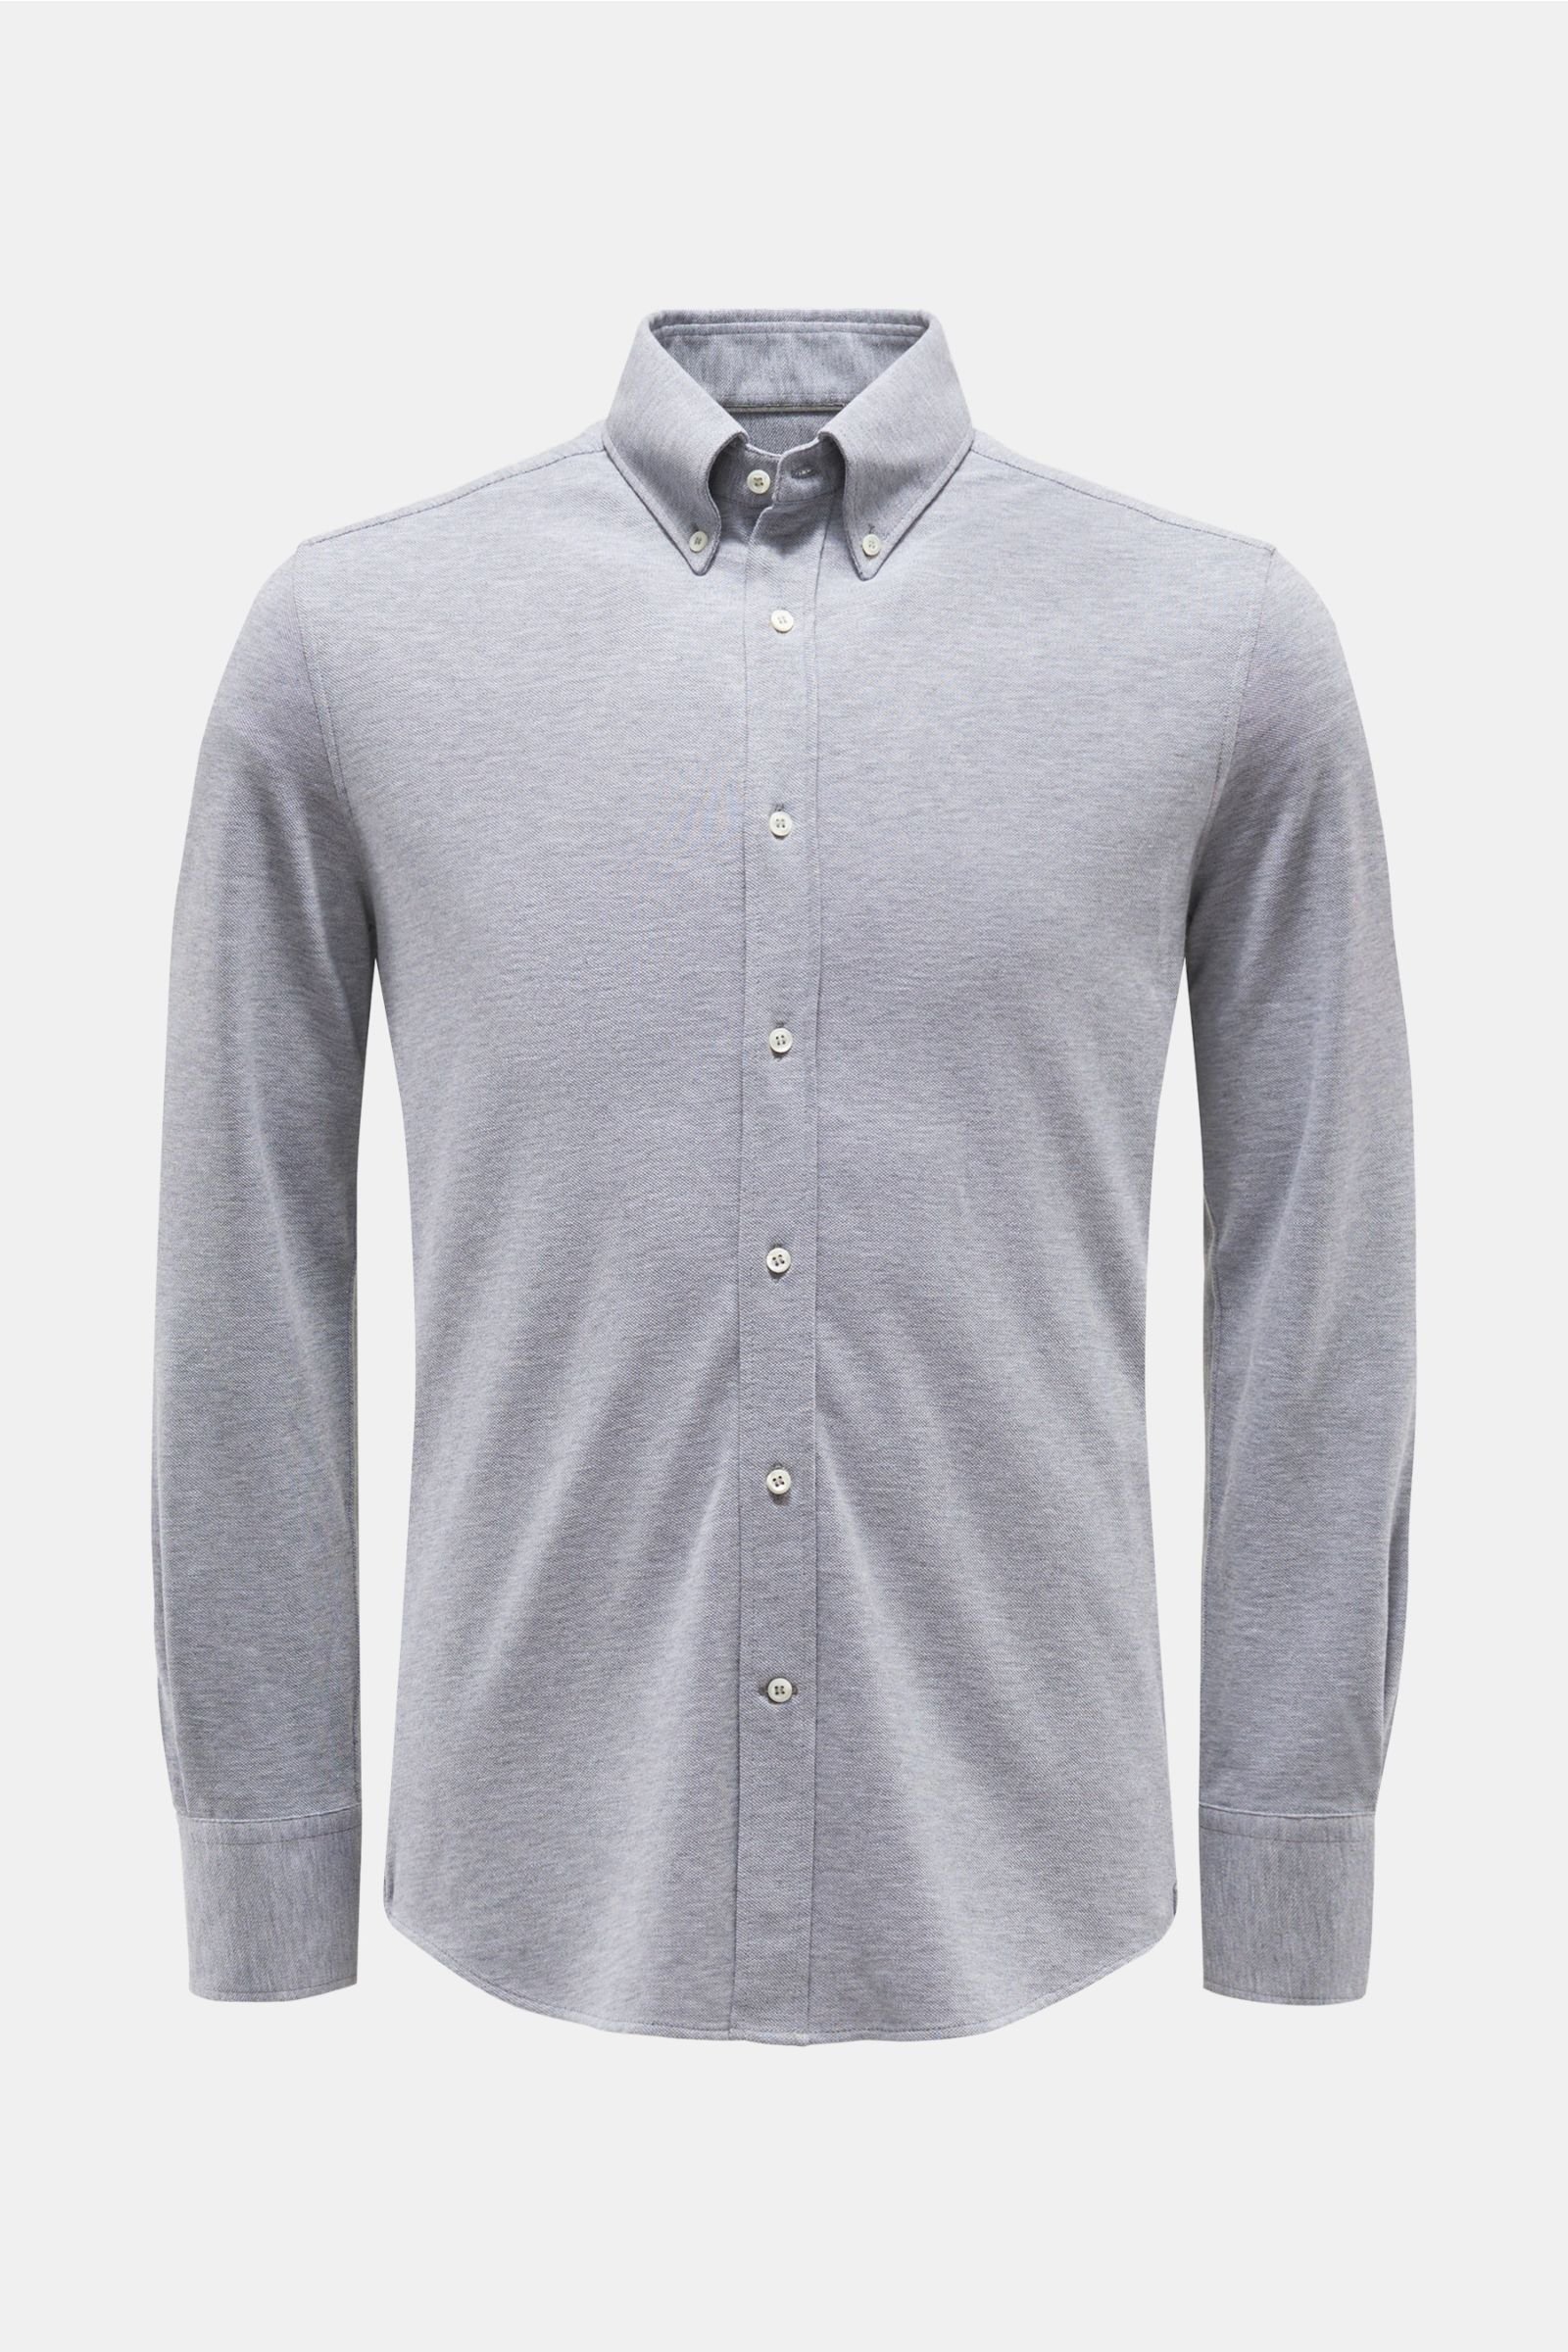 Jersey shirt button-down collar grey